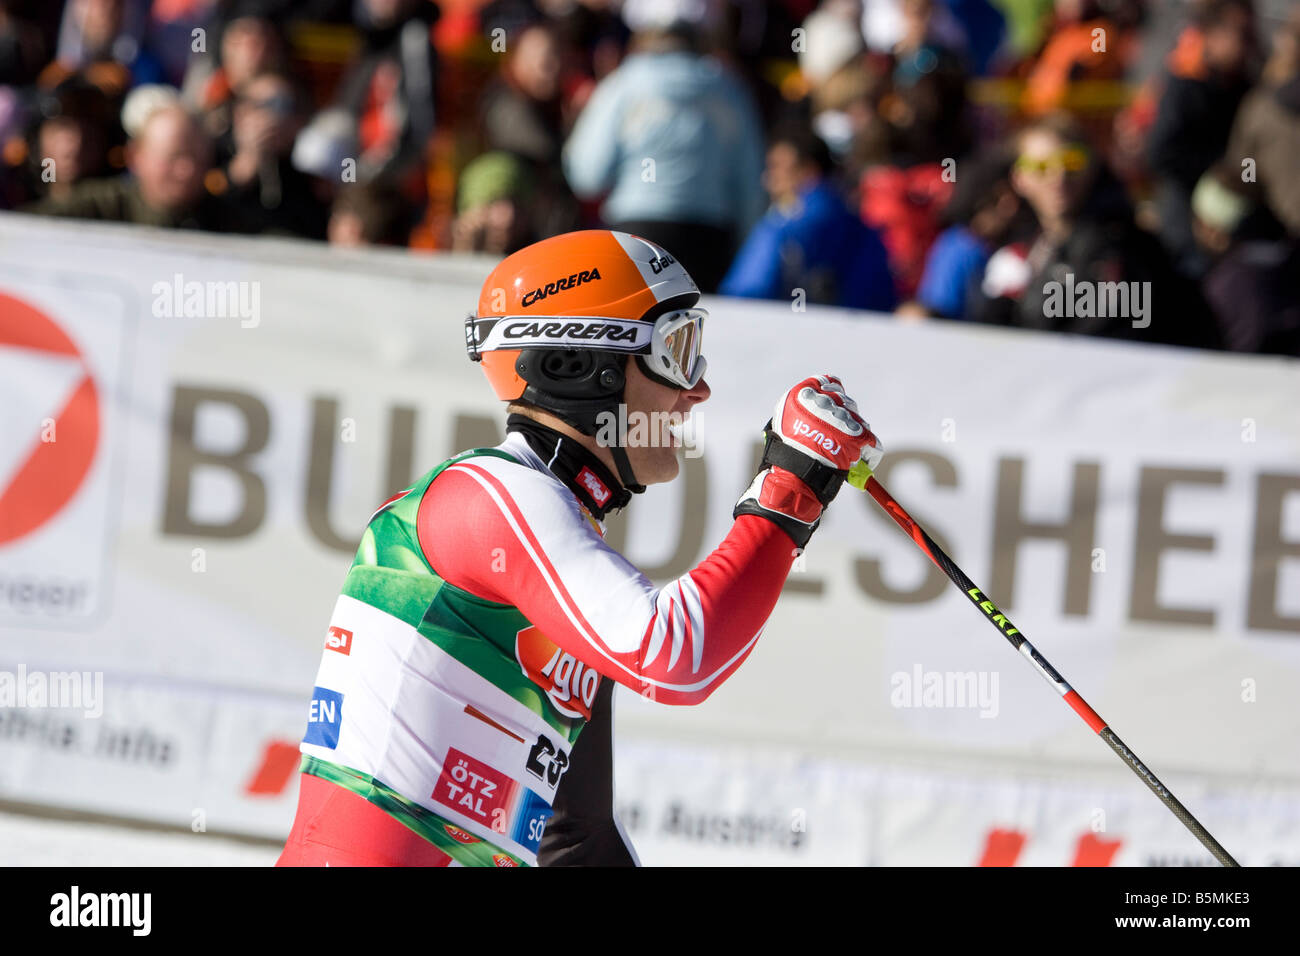 SOELDEN AUSTRIA OTT 26 Romed Baumann AUT competere nel mens slalom gigante presso il Ghiacciaio Rettenbach Foto Stock